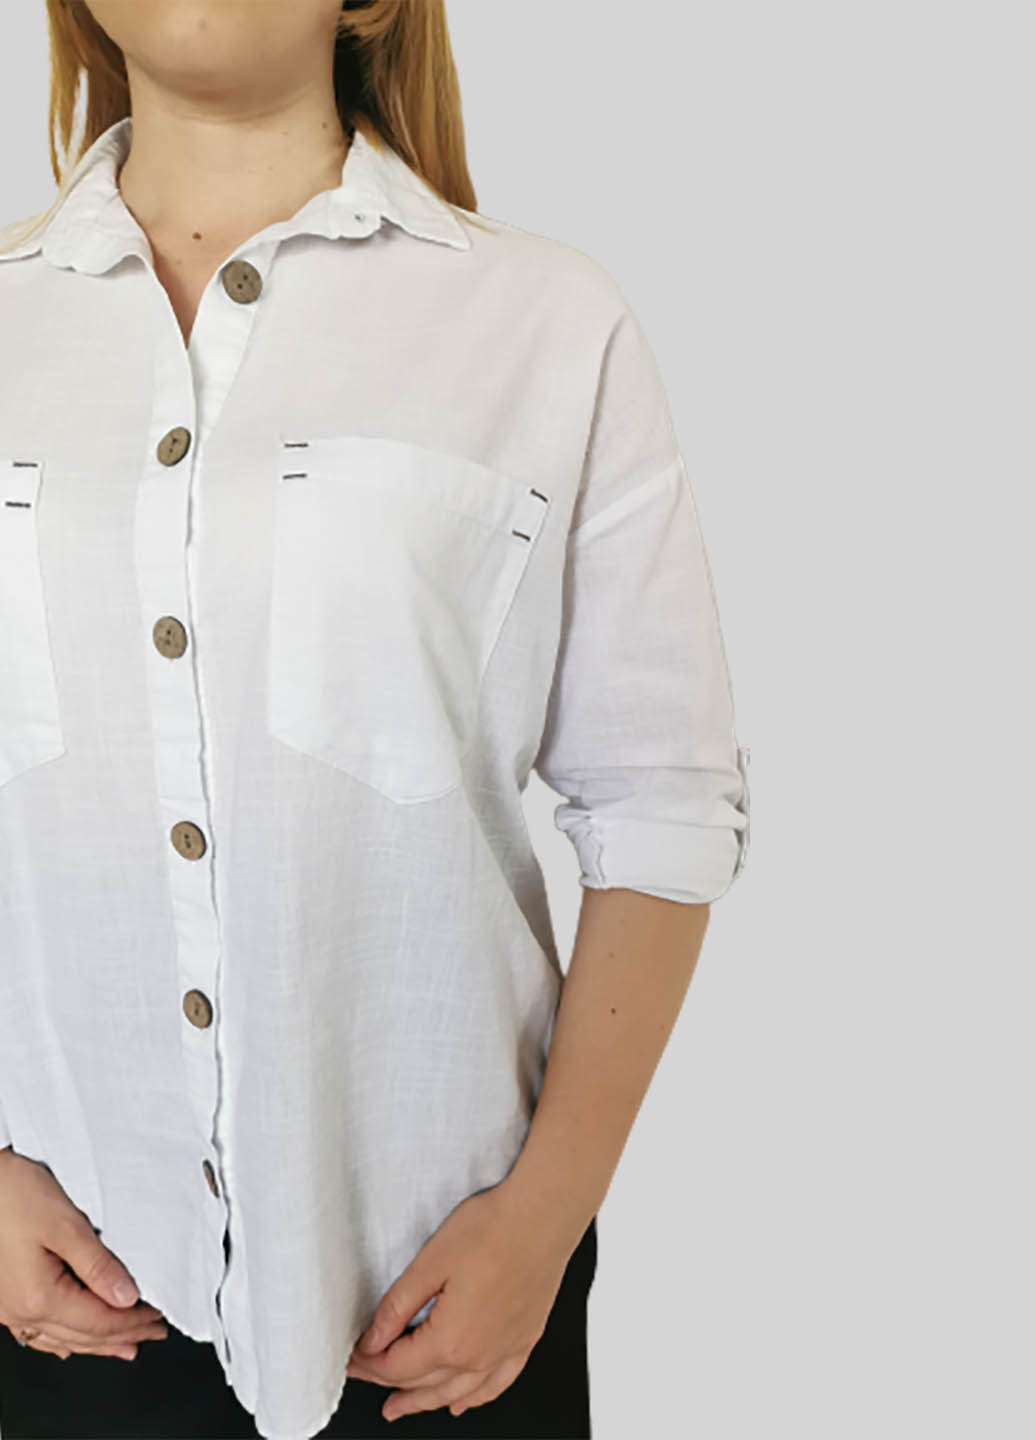 Белая кэжуал рубашка Luvete с длинным рукавом